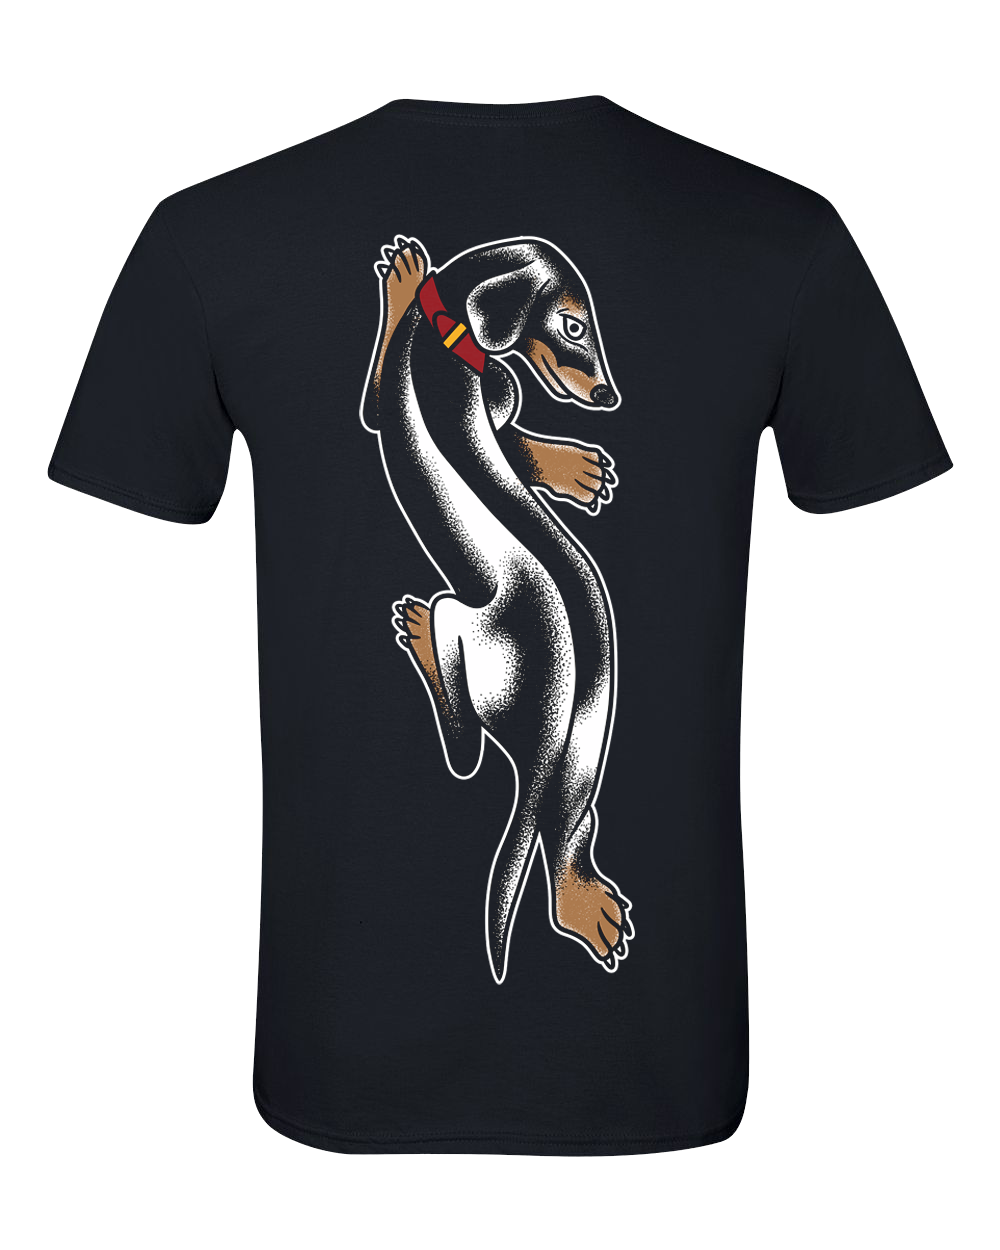 KHP “Pet all the Dogs” Unisex T-Shirt